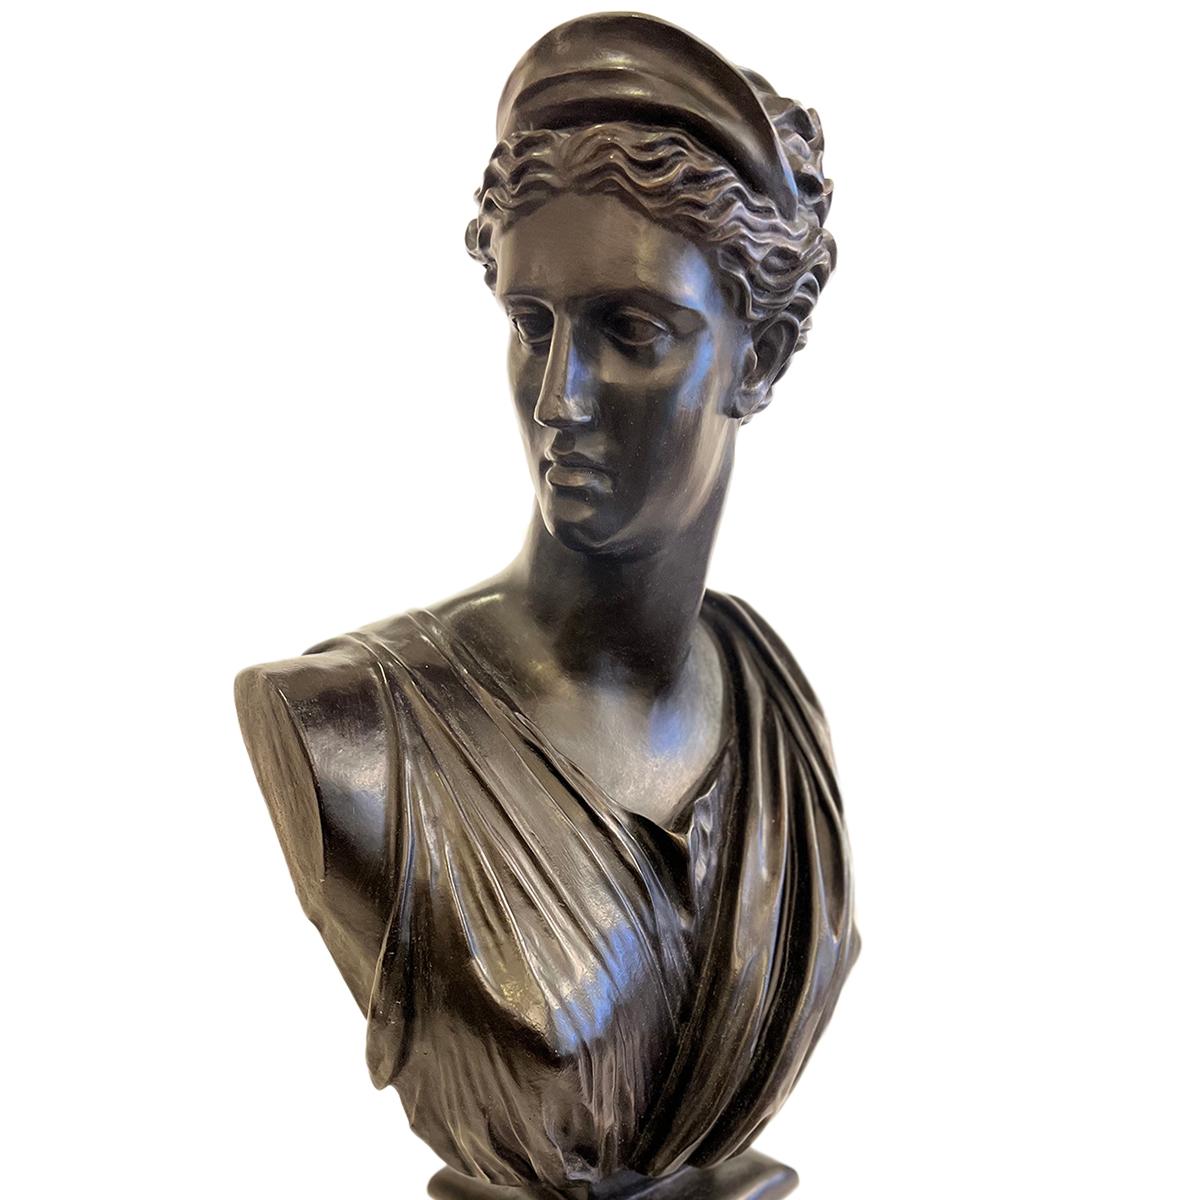 A circa 1940's Danish ceramic bust depicting the Goddess Minerva.

Measurements:
Height: 22.5